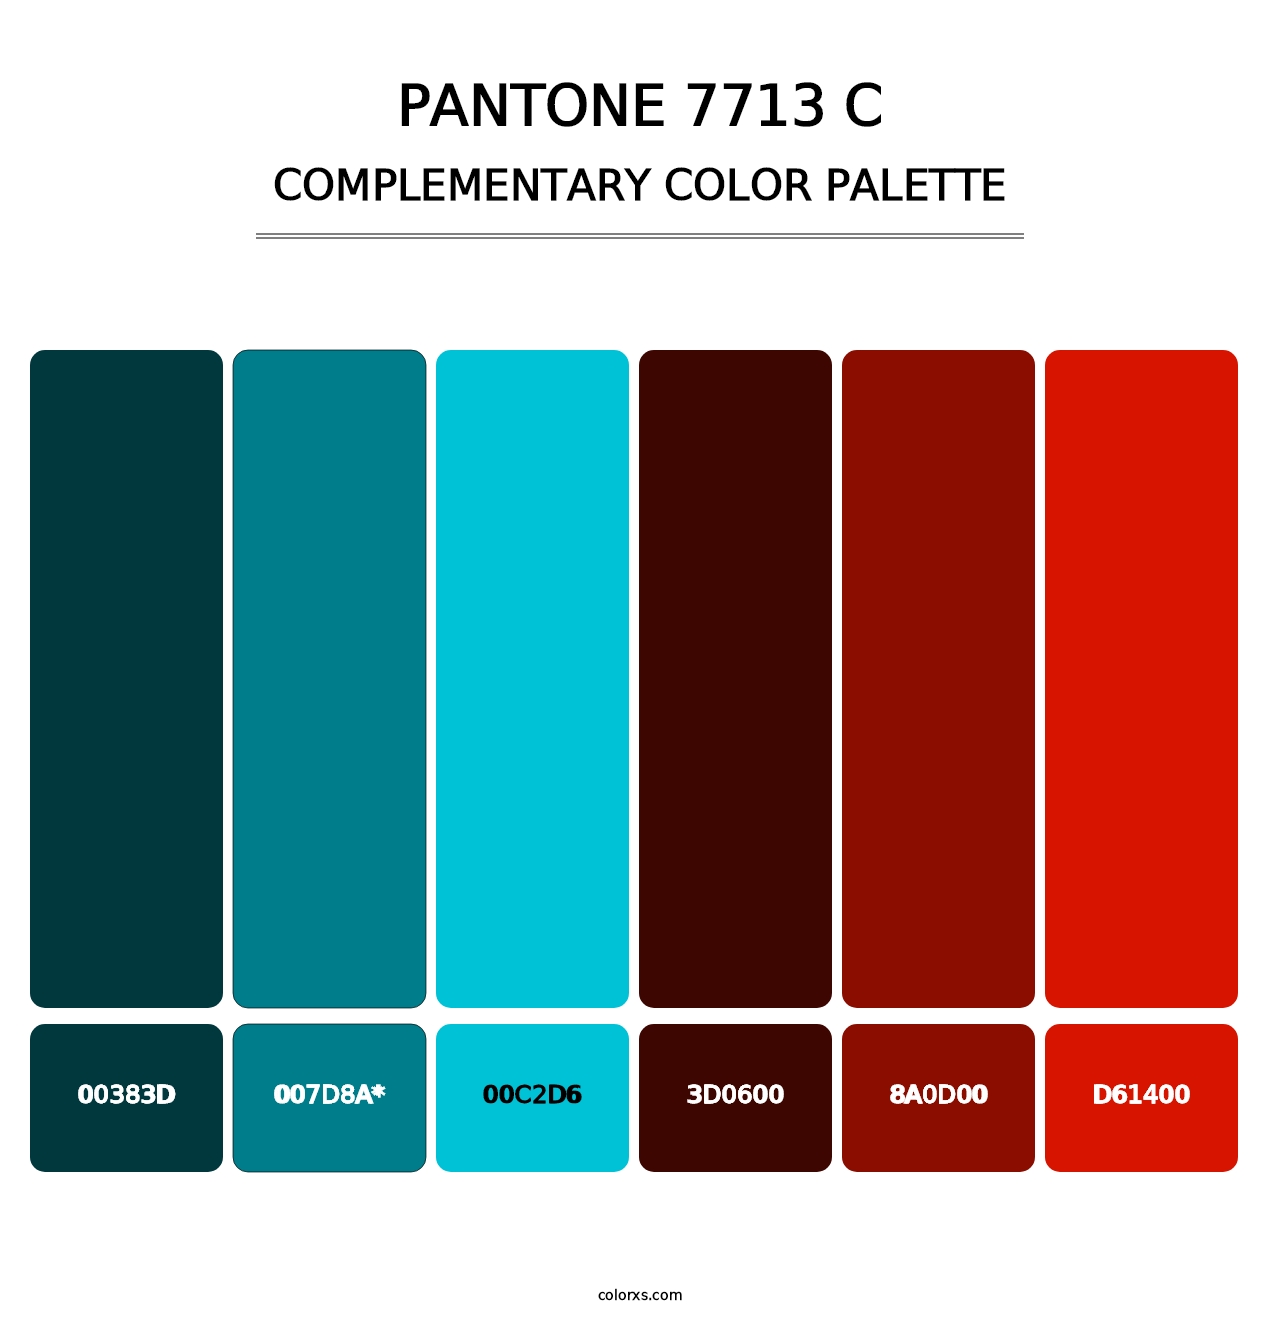 PANTONE 7713 C - Complementary Color Palette